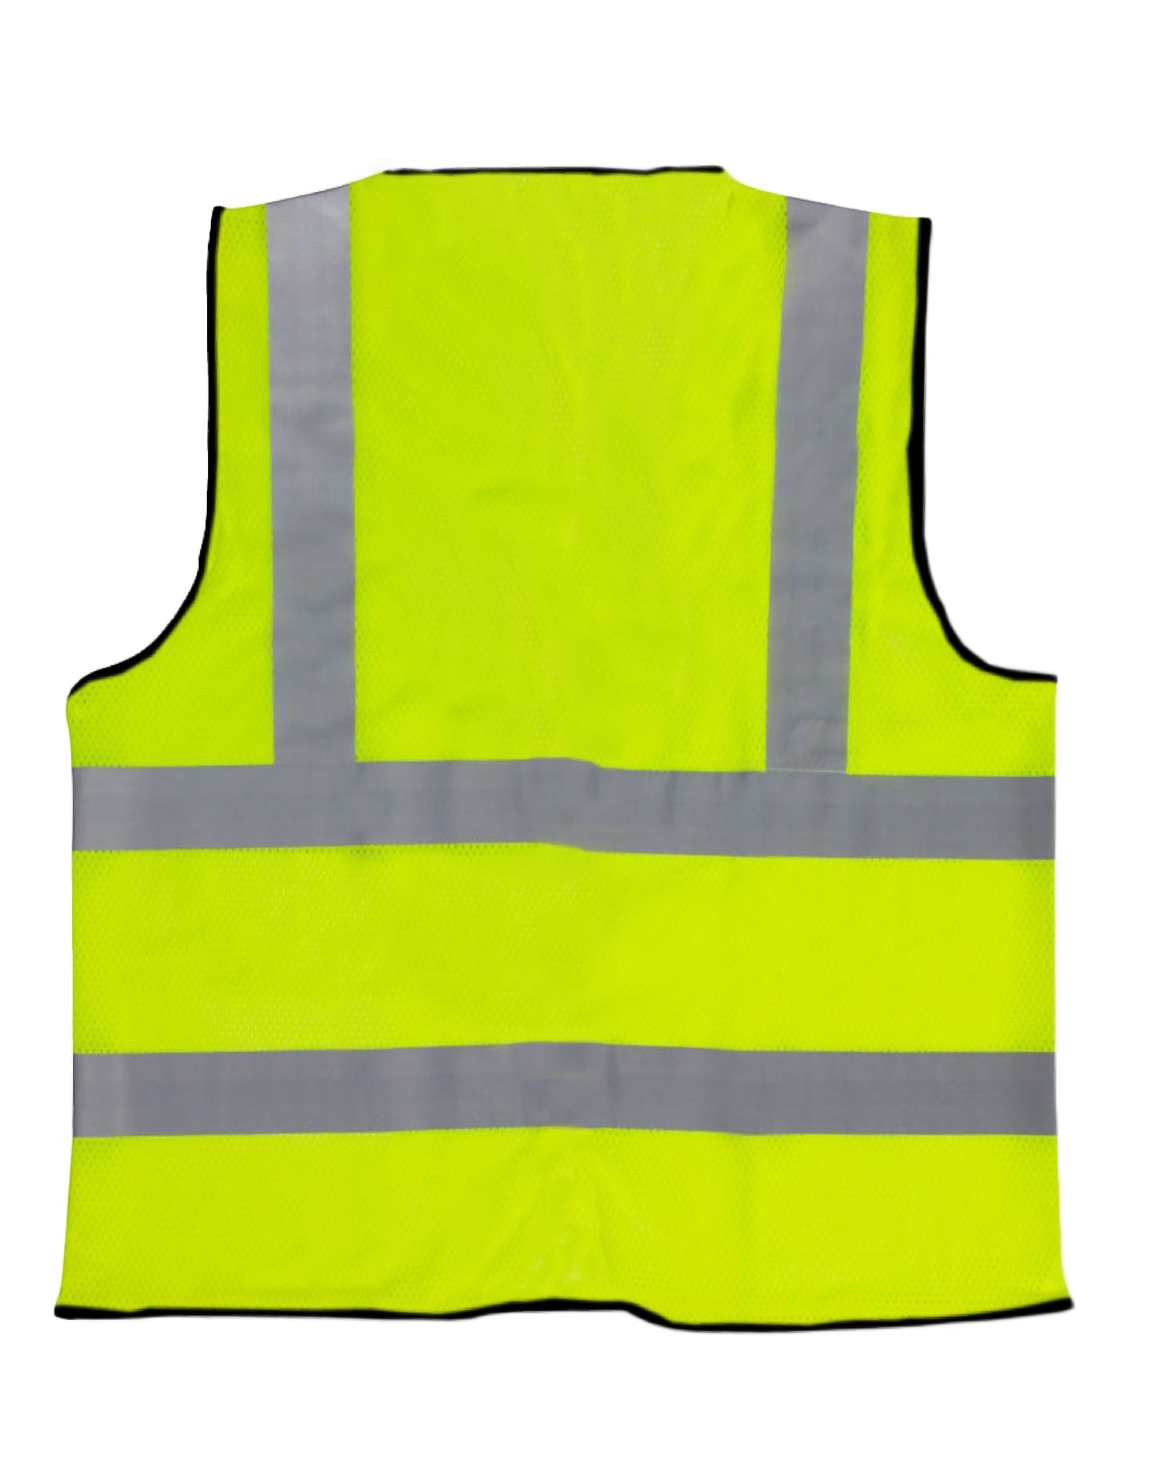 vest clipart safety equipment